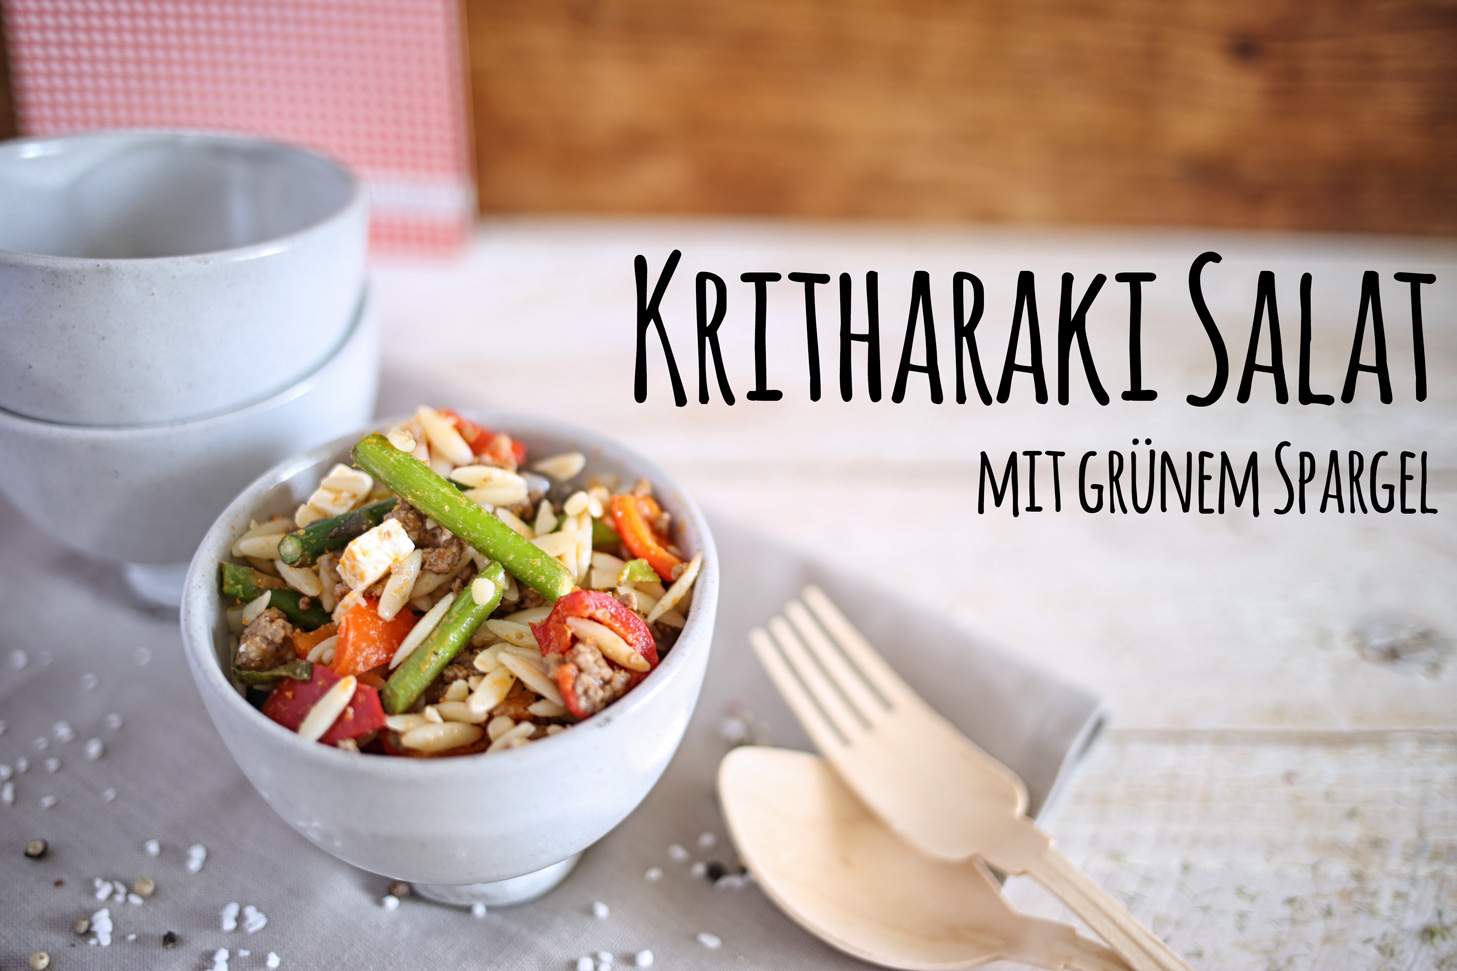 Kritharaki Salat